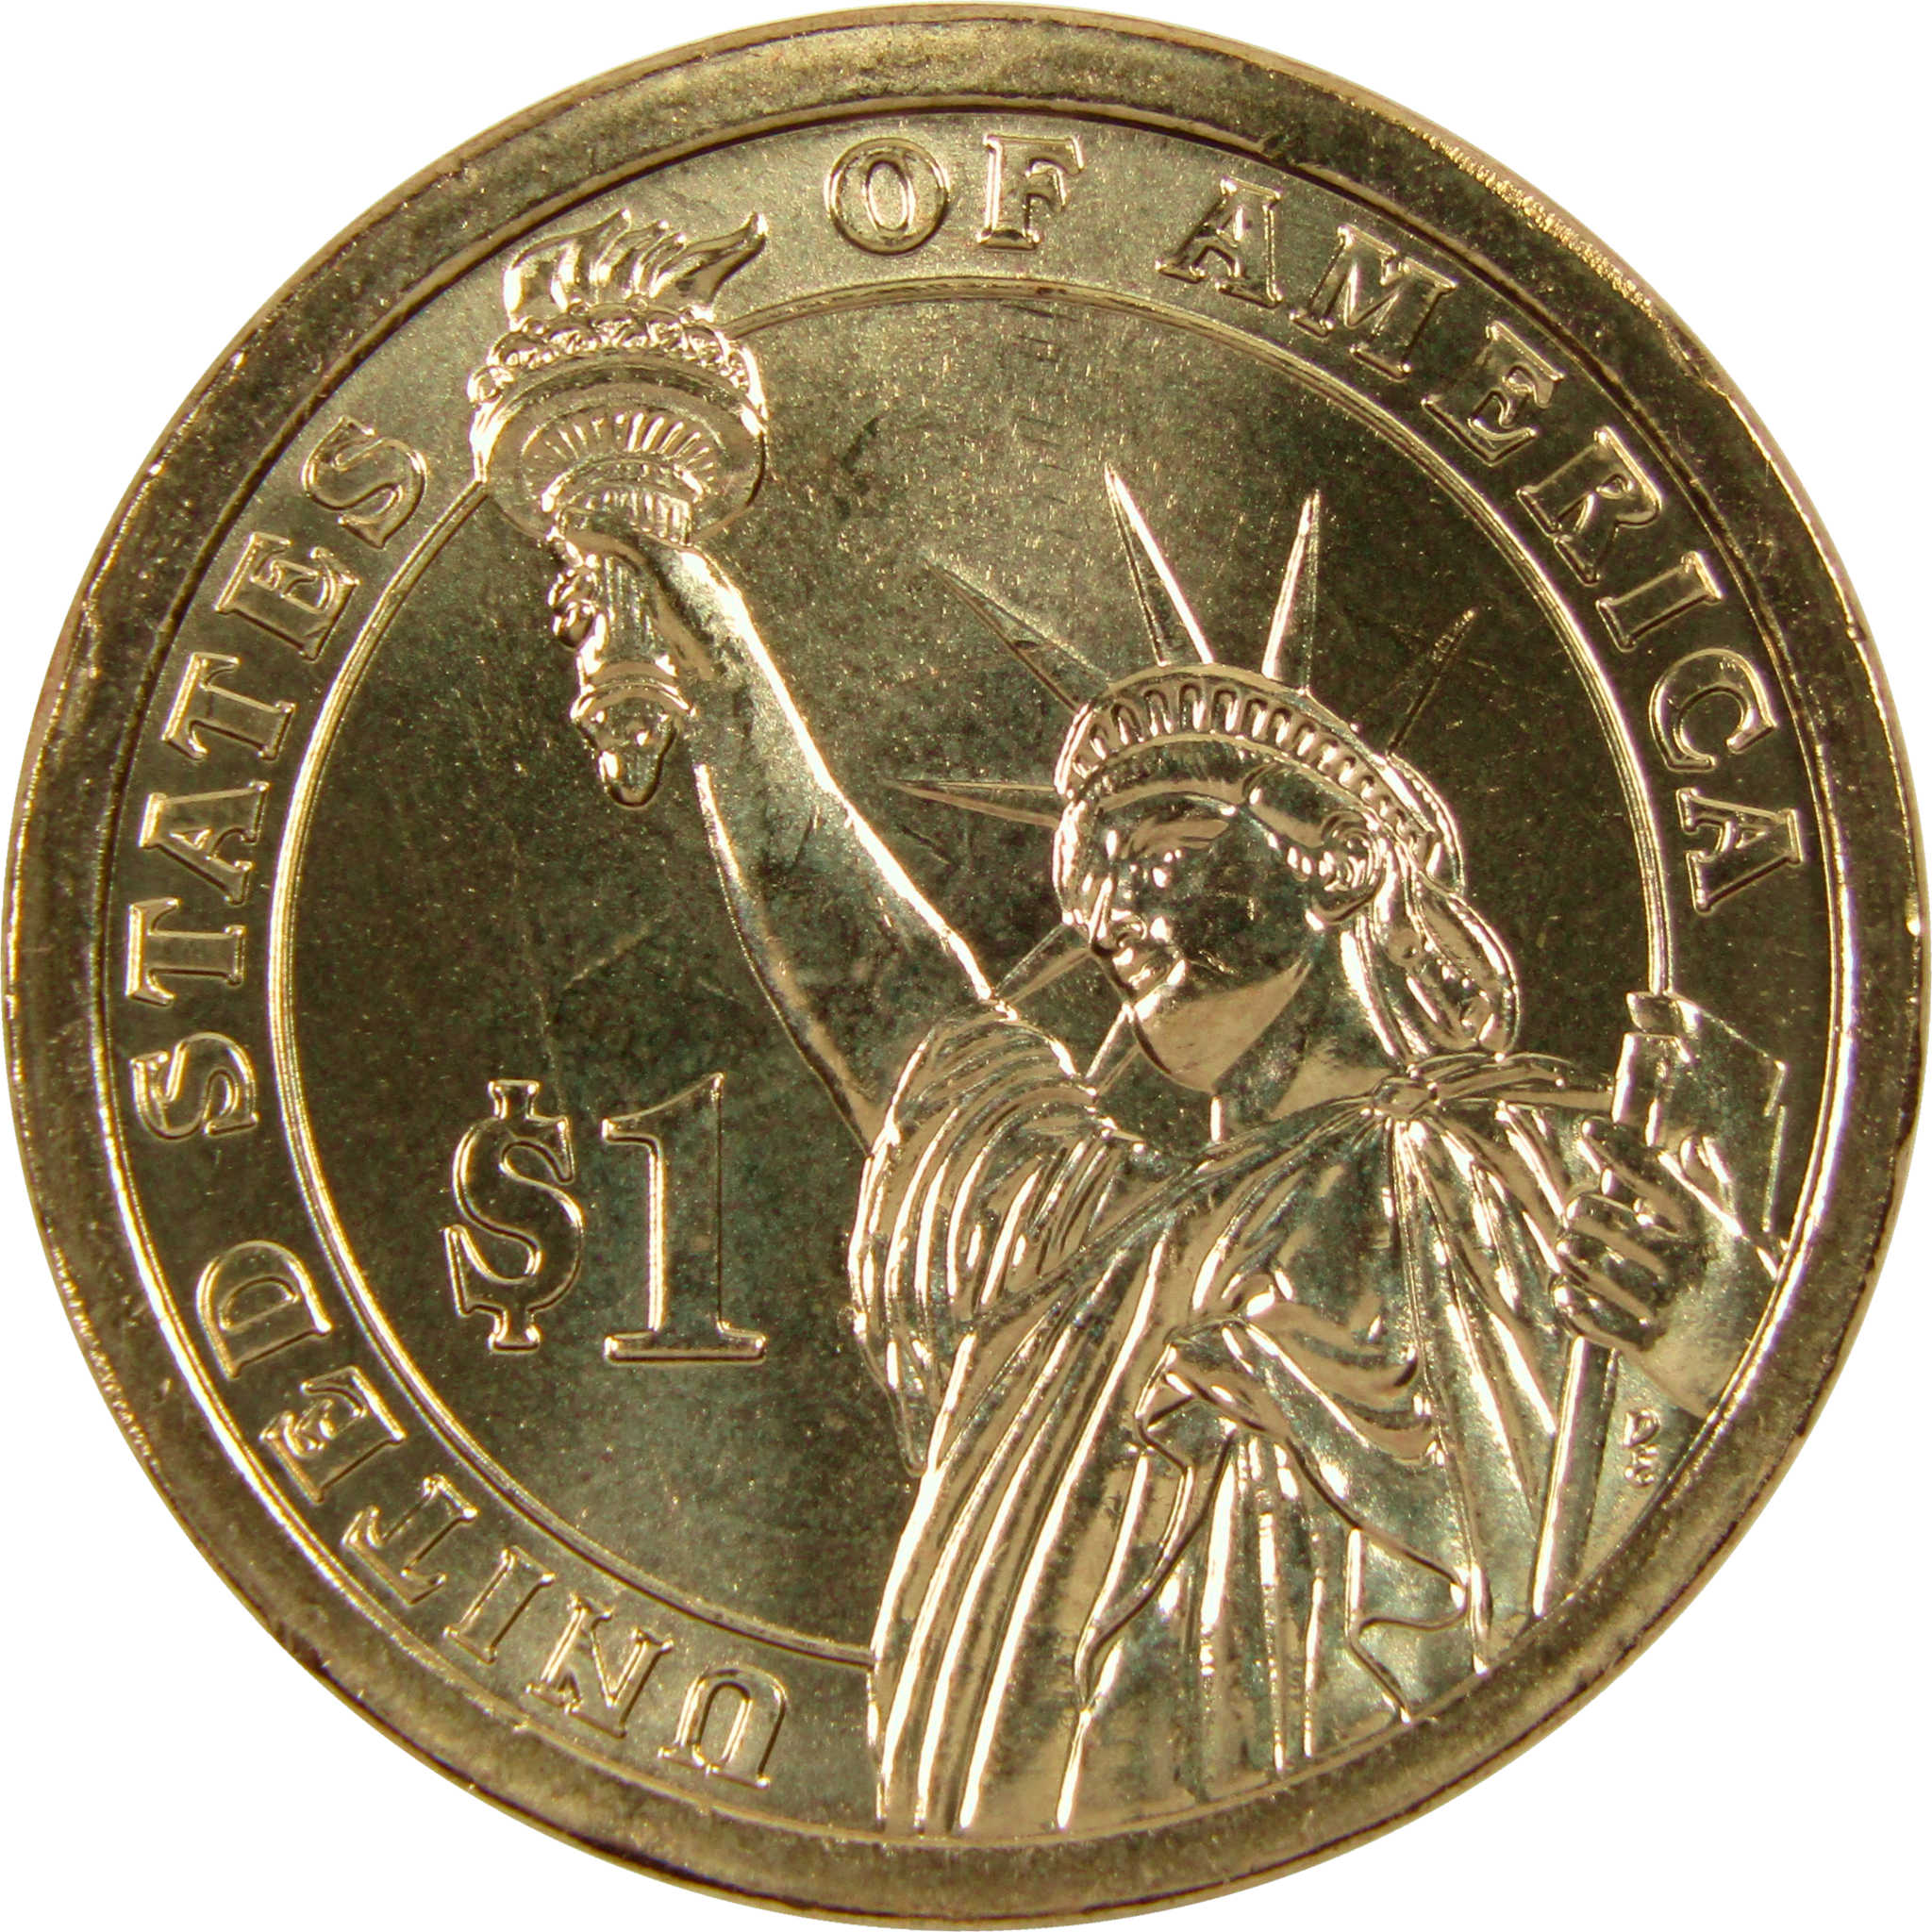 2010 P James Buchanan Presidential Dollar BU Uncirculated $1 Coin